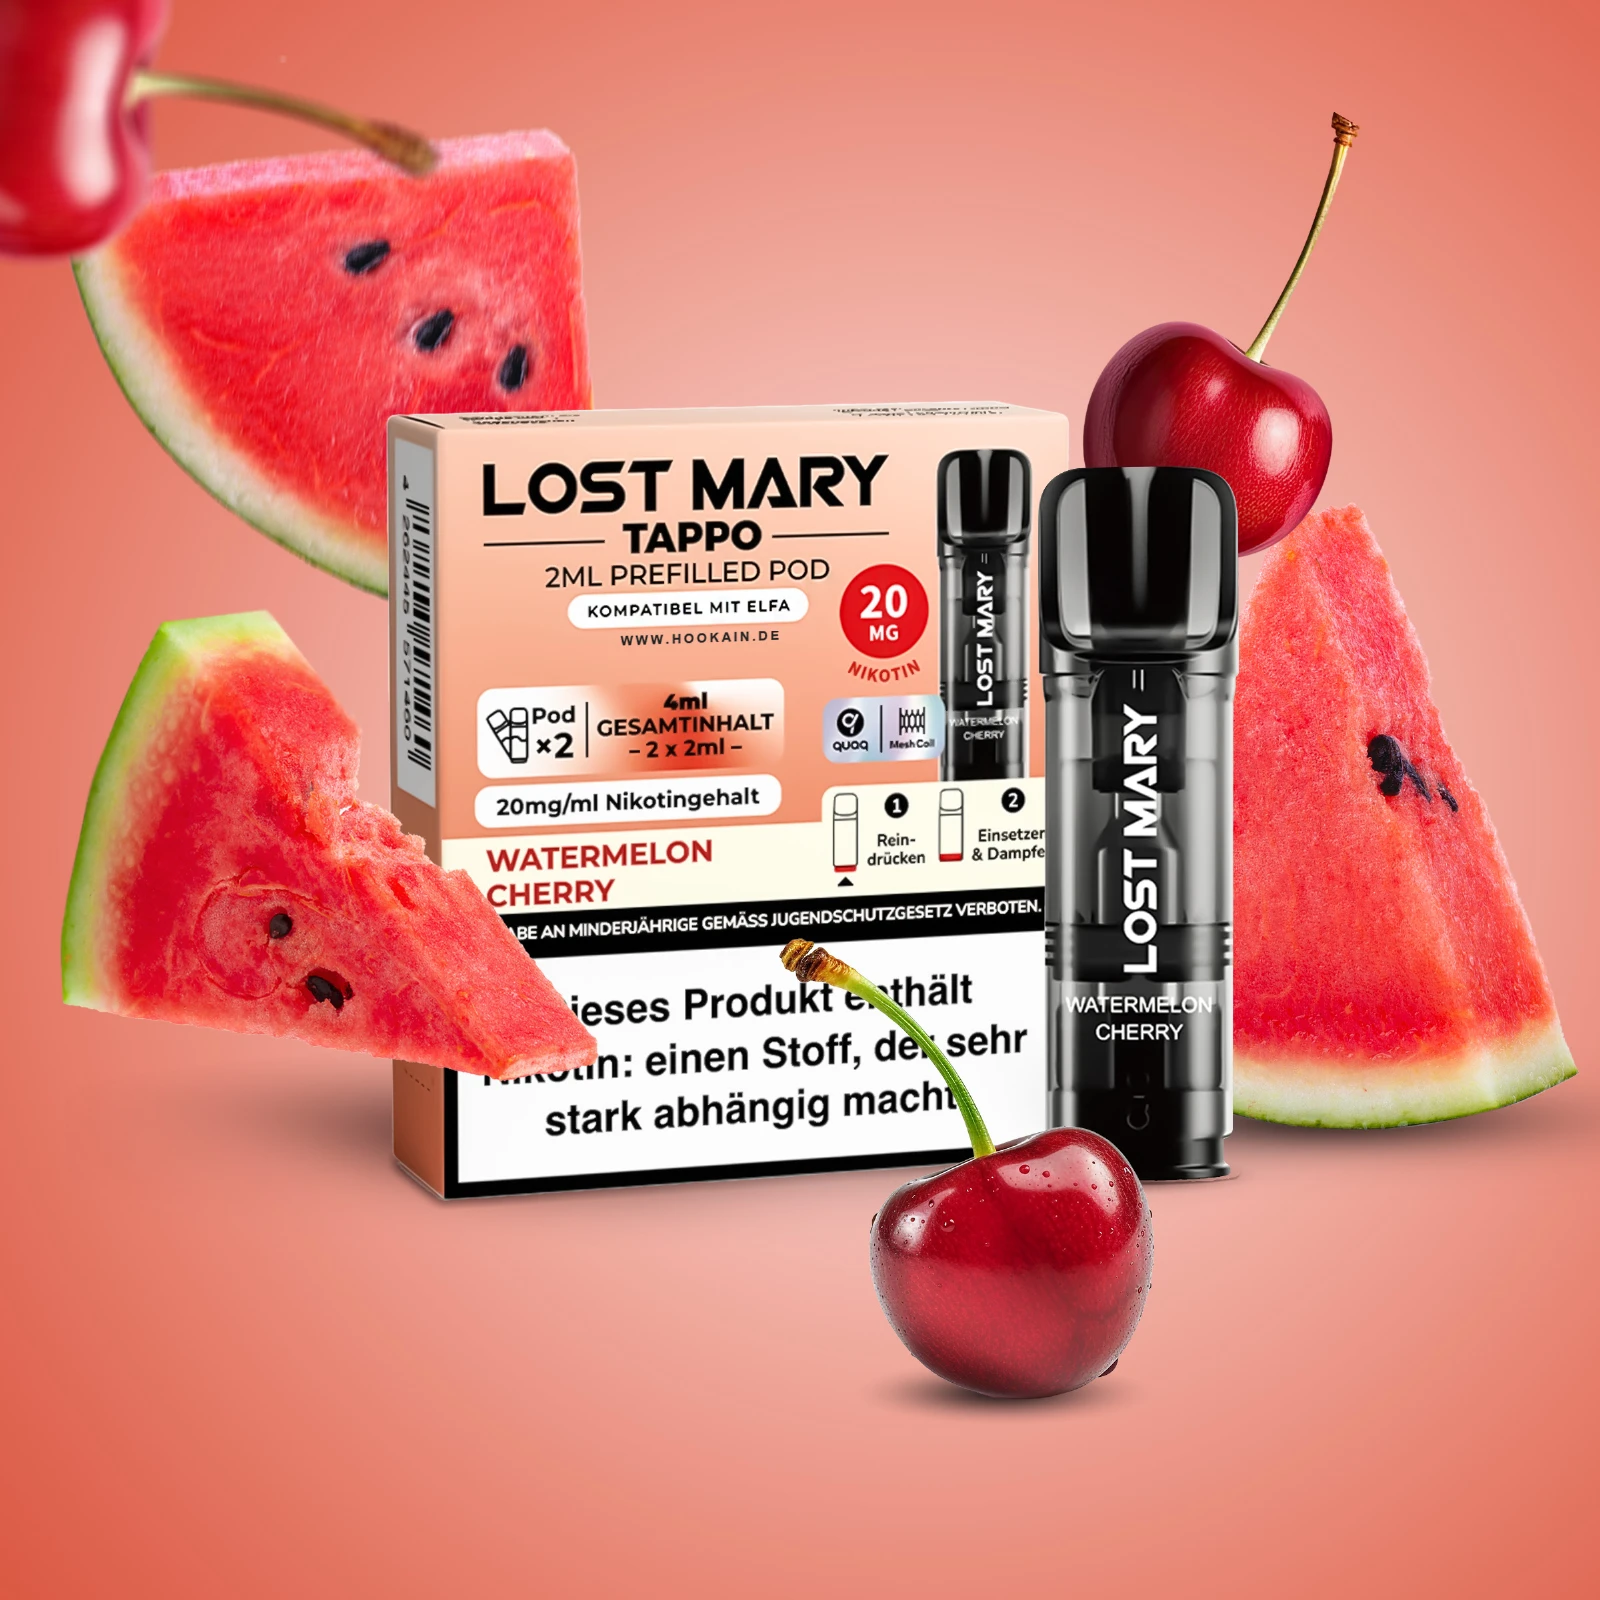 Lost Mary Tappo Watermelon Cherry: Umweltfreundliches Pod-System mit Prefilled Pods